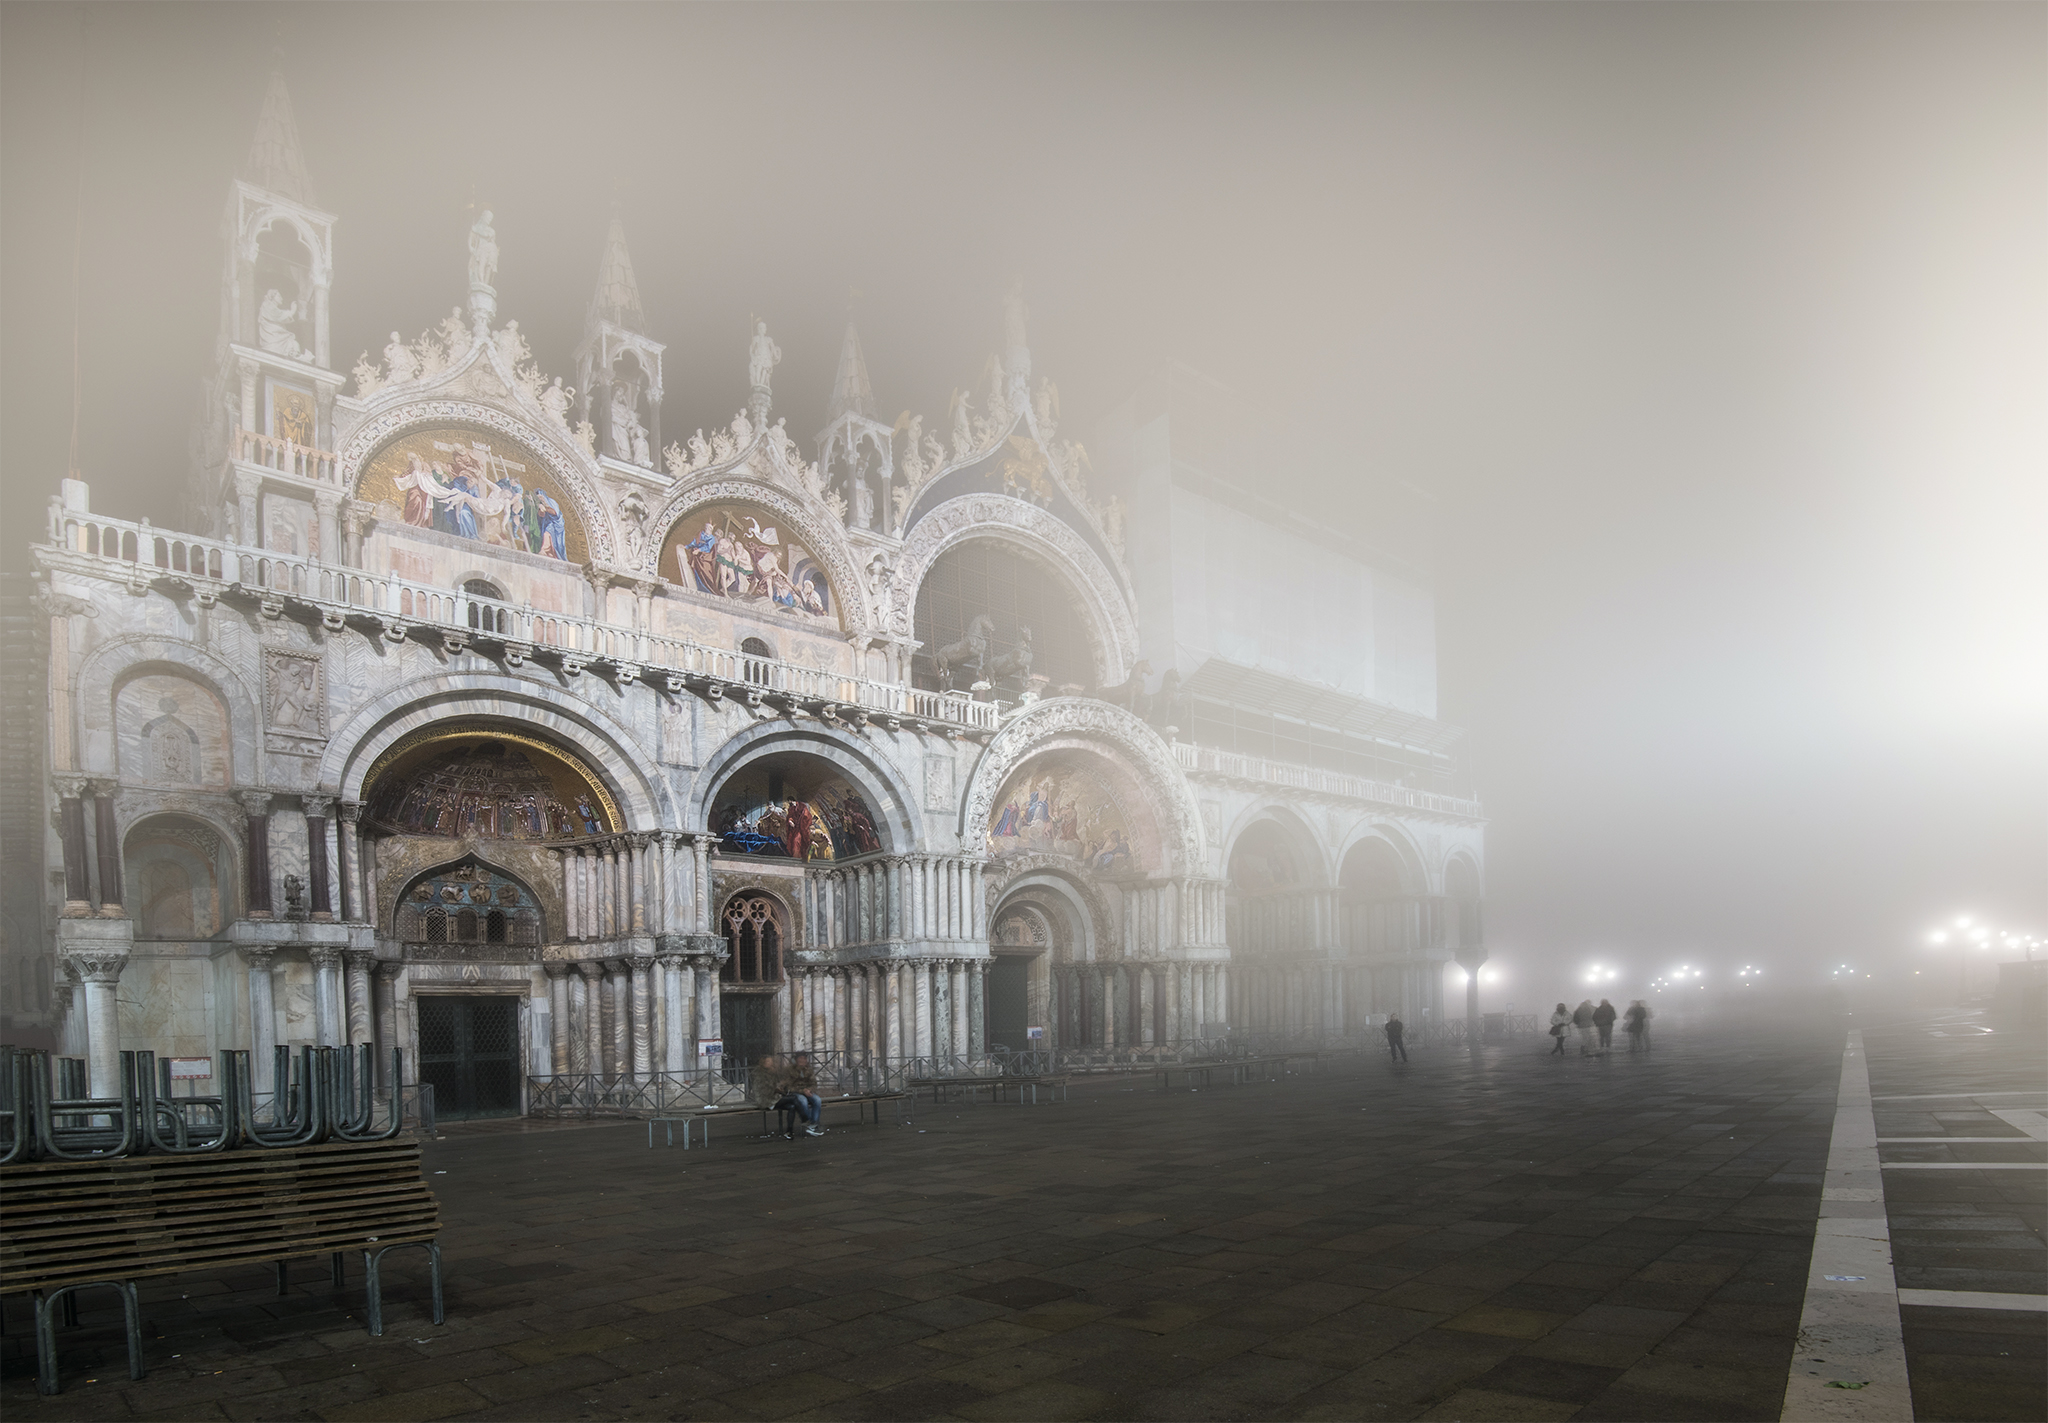 Foggy day in Venice - Saint Mark's Basilica